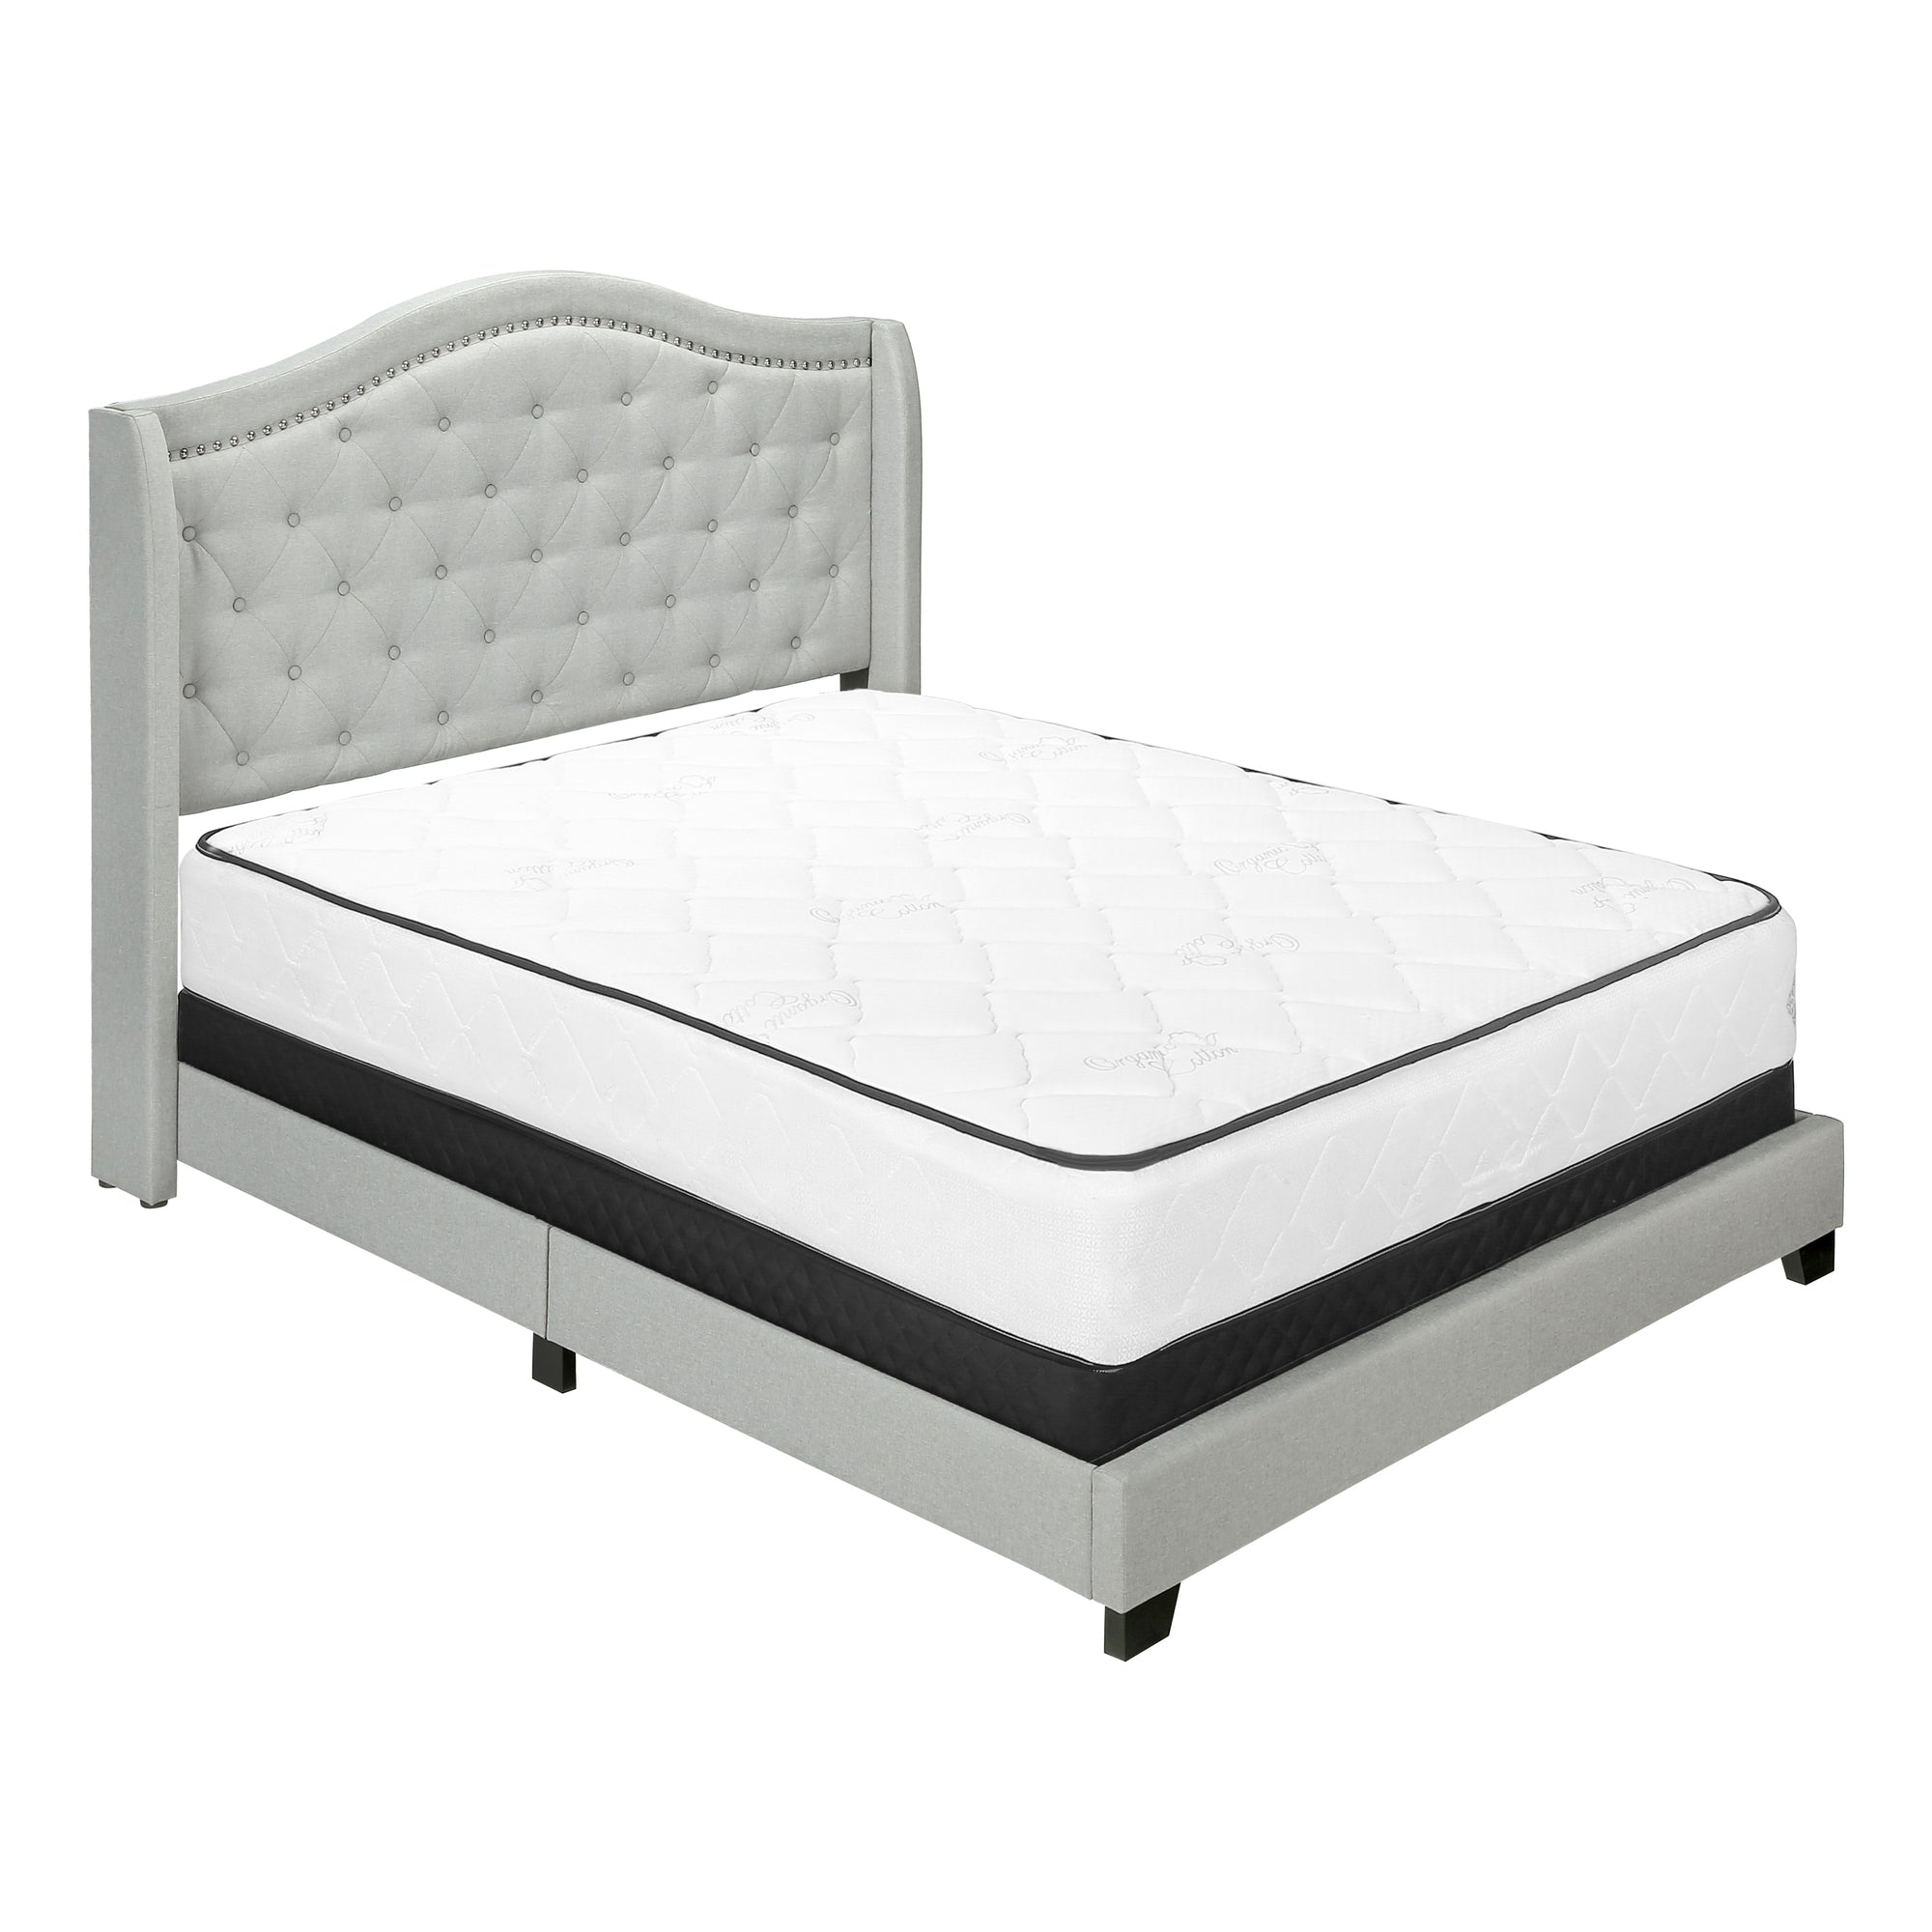 MN-205967Q    Bed, Frame, Platform, Bedroom, Queen Size, Upholstered, Velvet Fabric, Wood Legs, Light Grey, Black, Classic, Contemporary, Modern